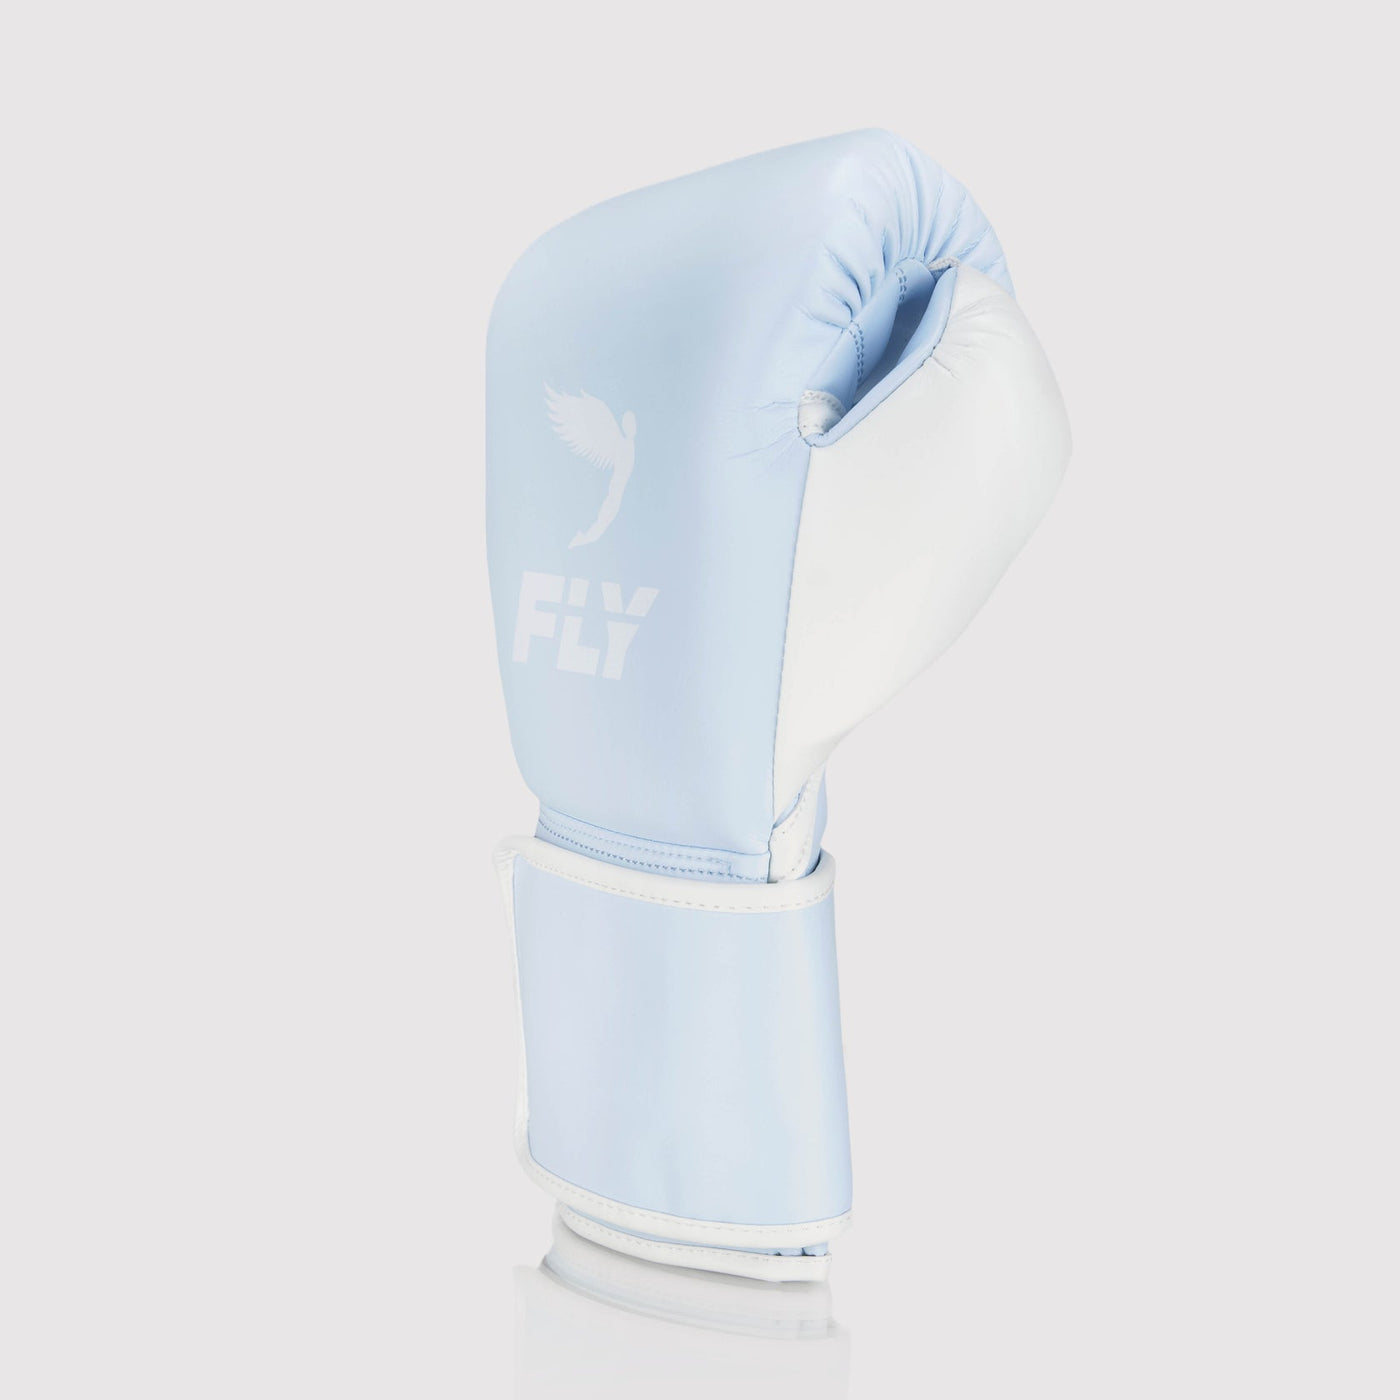 FLY SUPERLOOP X Boxing Glove